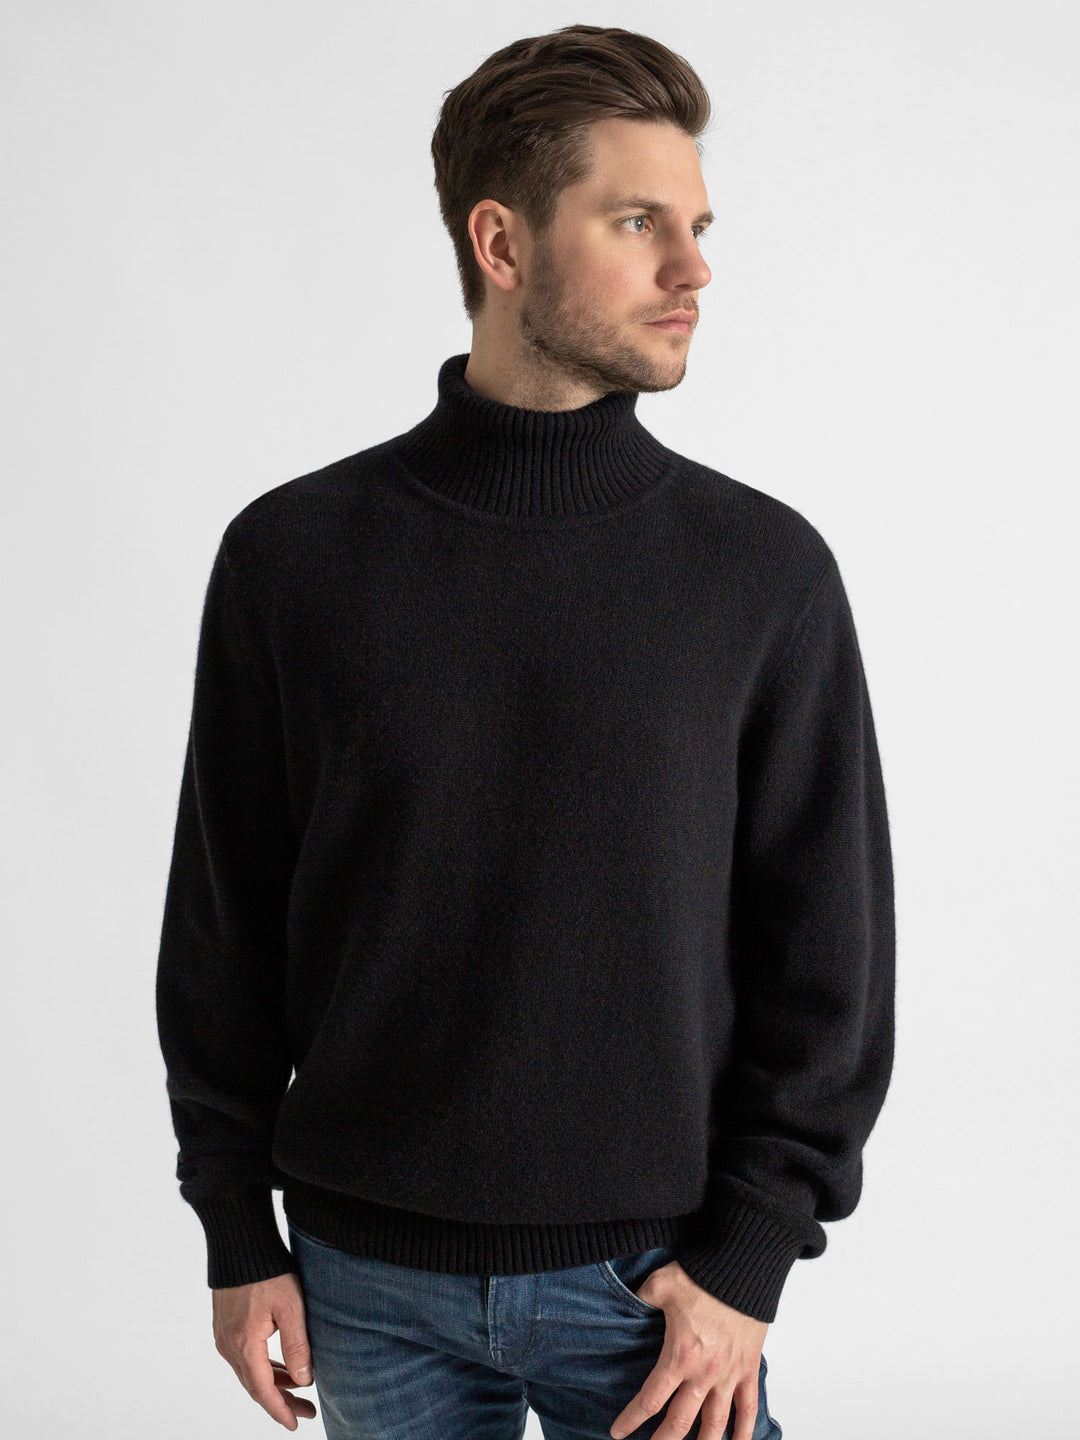 Men's Turtle Neck Cashmere Sweater Black